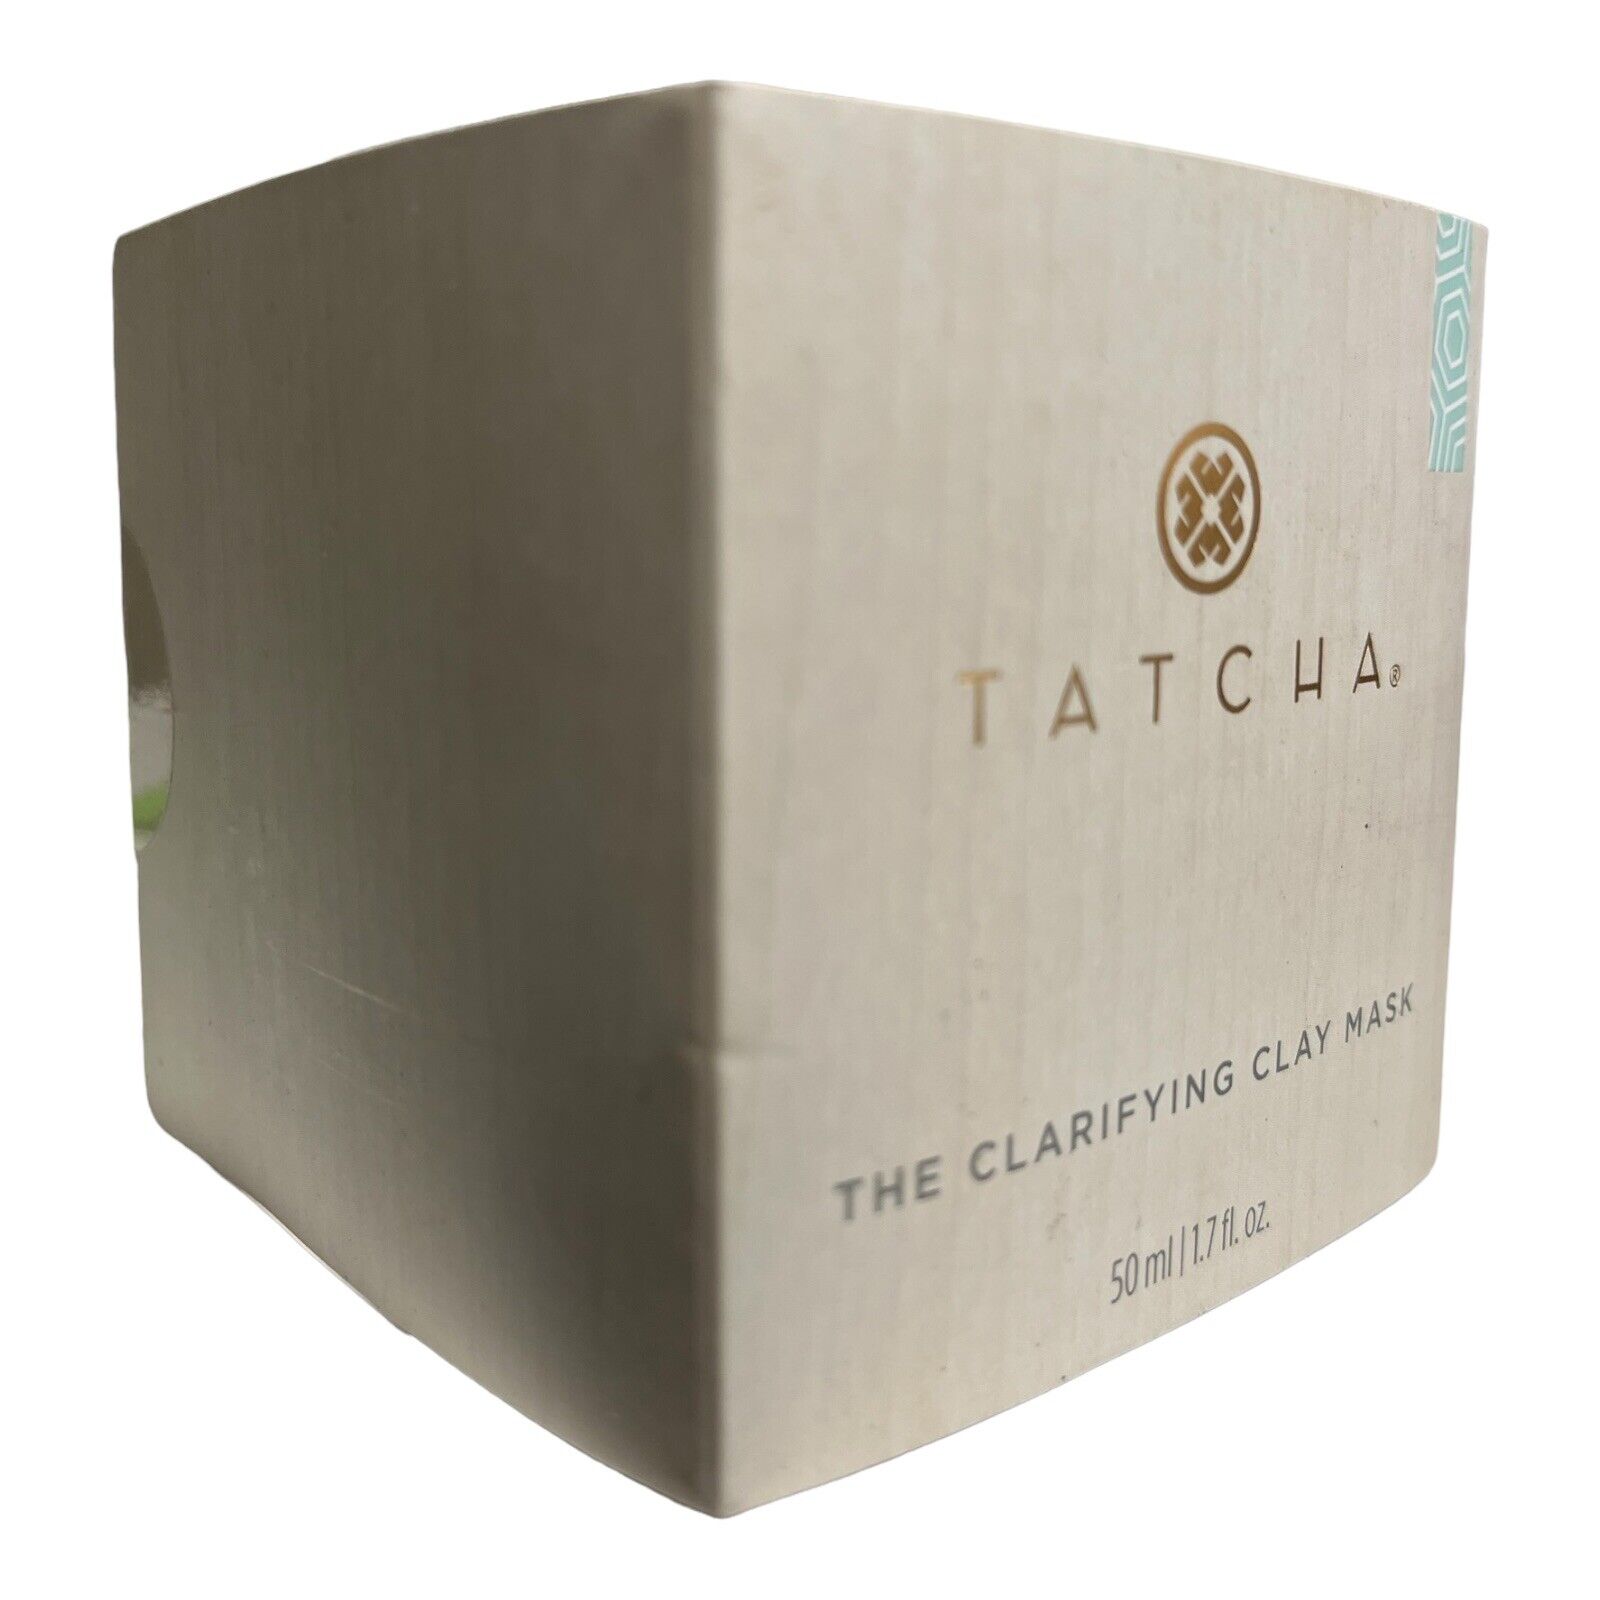 Tatcha Clarifying Clay Mask - Brand New